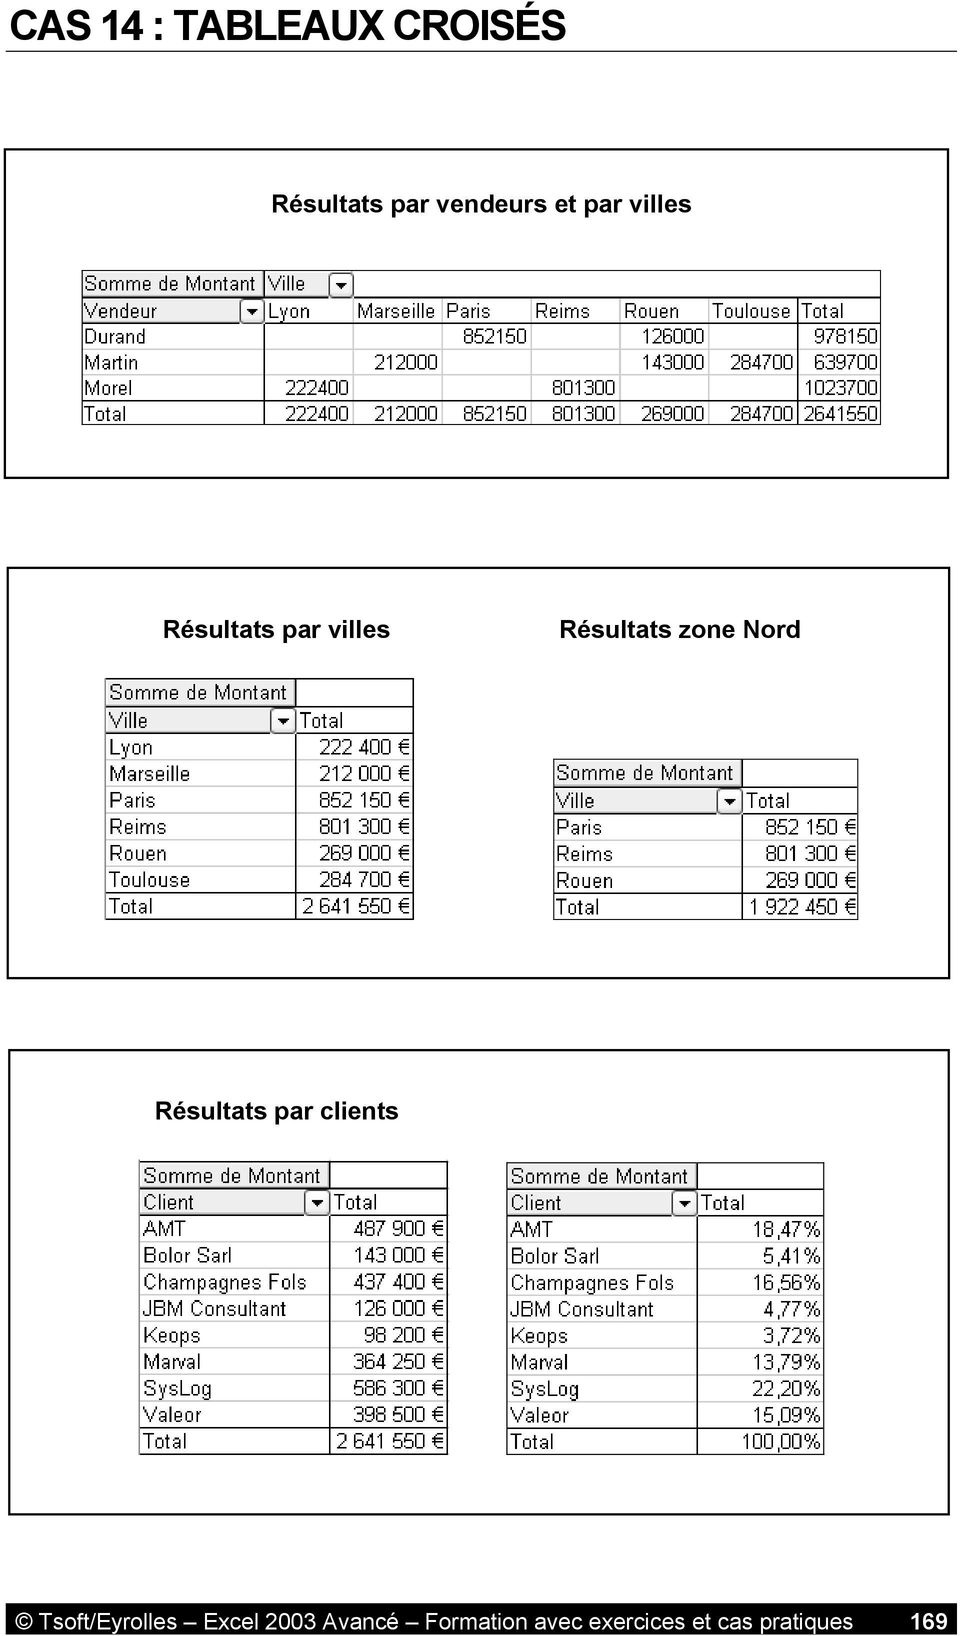 Nord Résultats par clients Tsoft/Eyrolles Excel